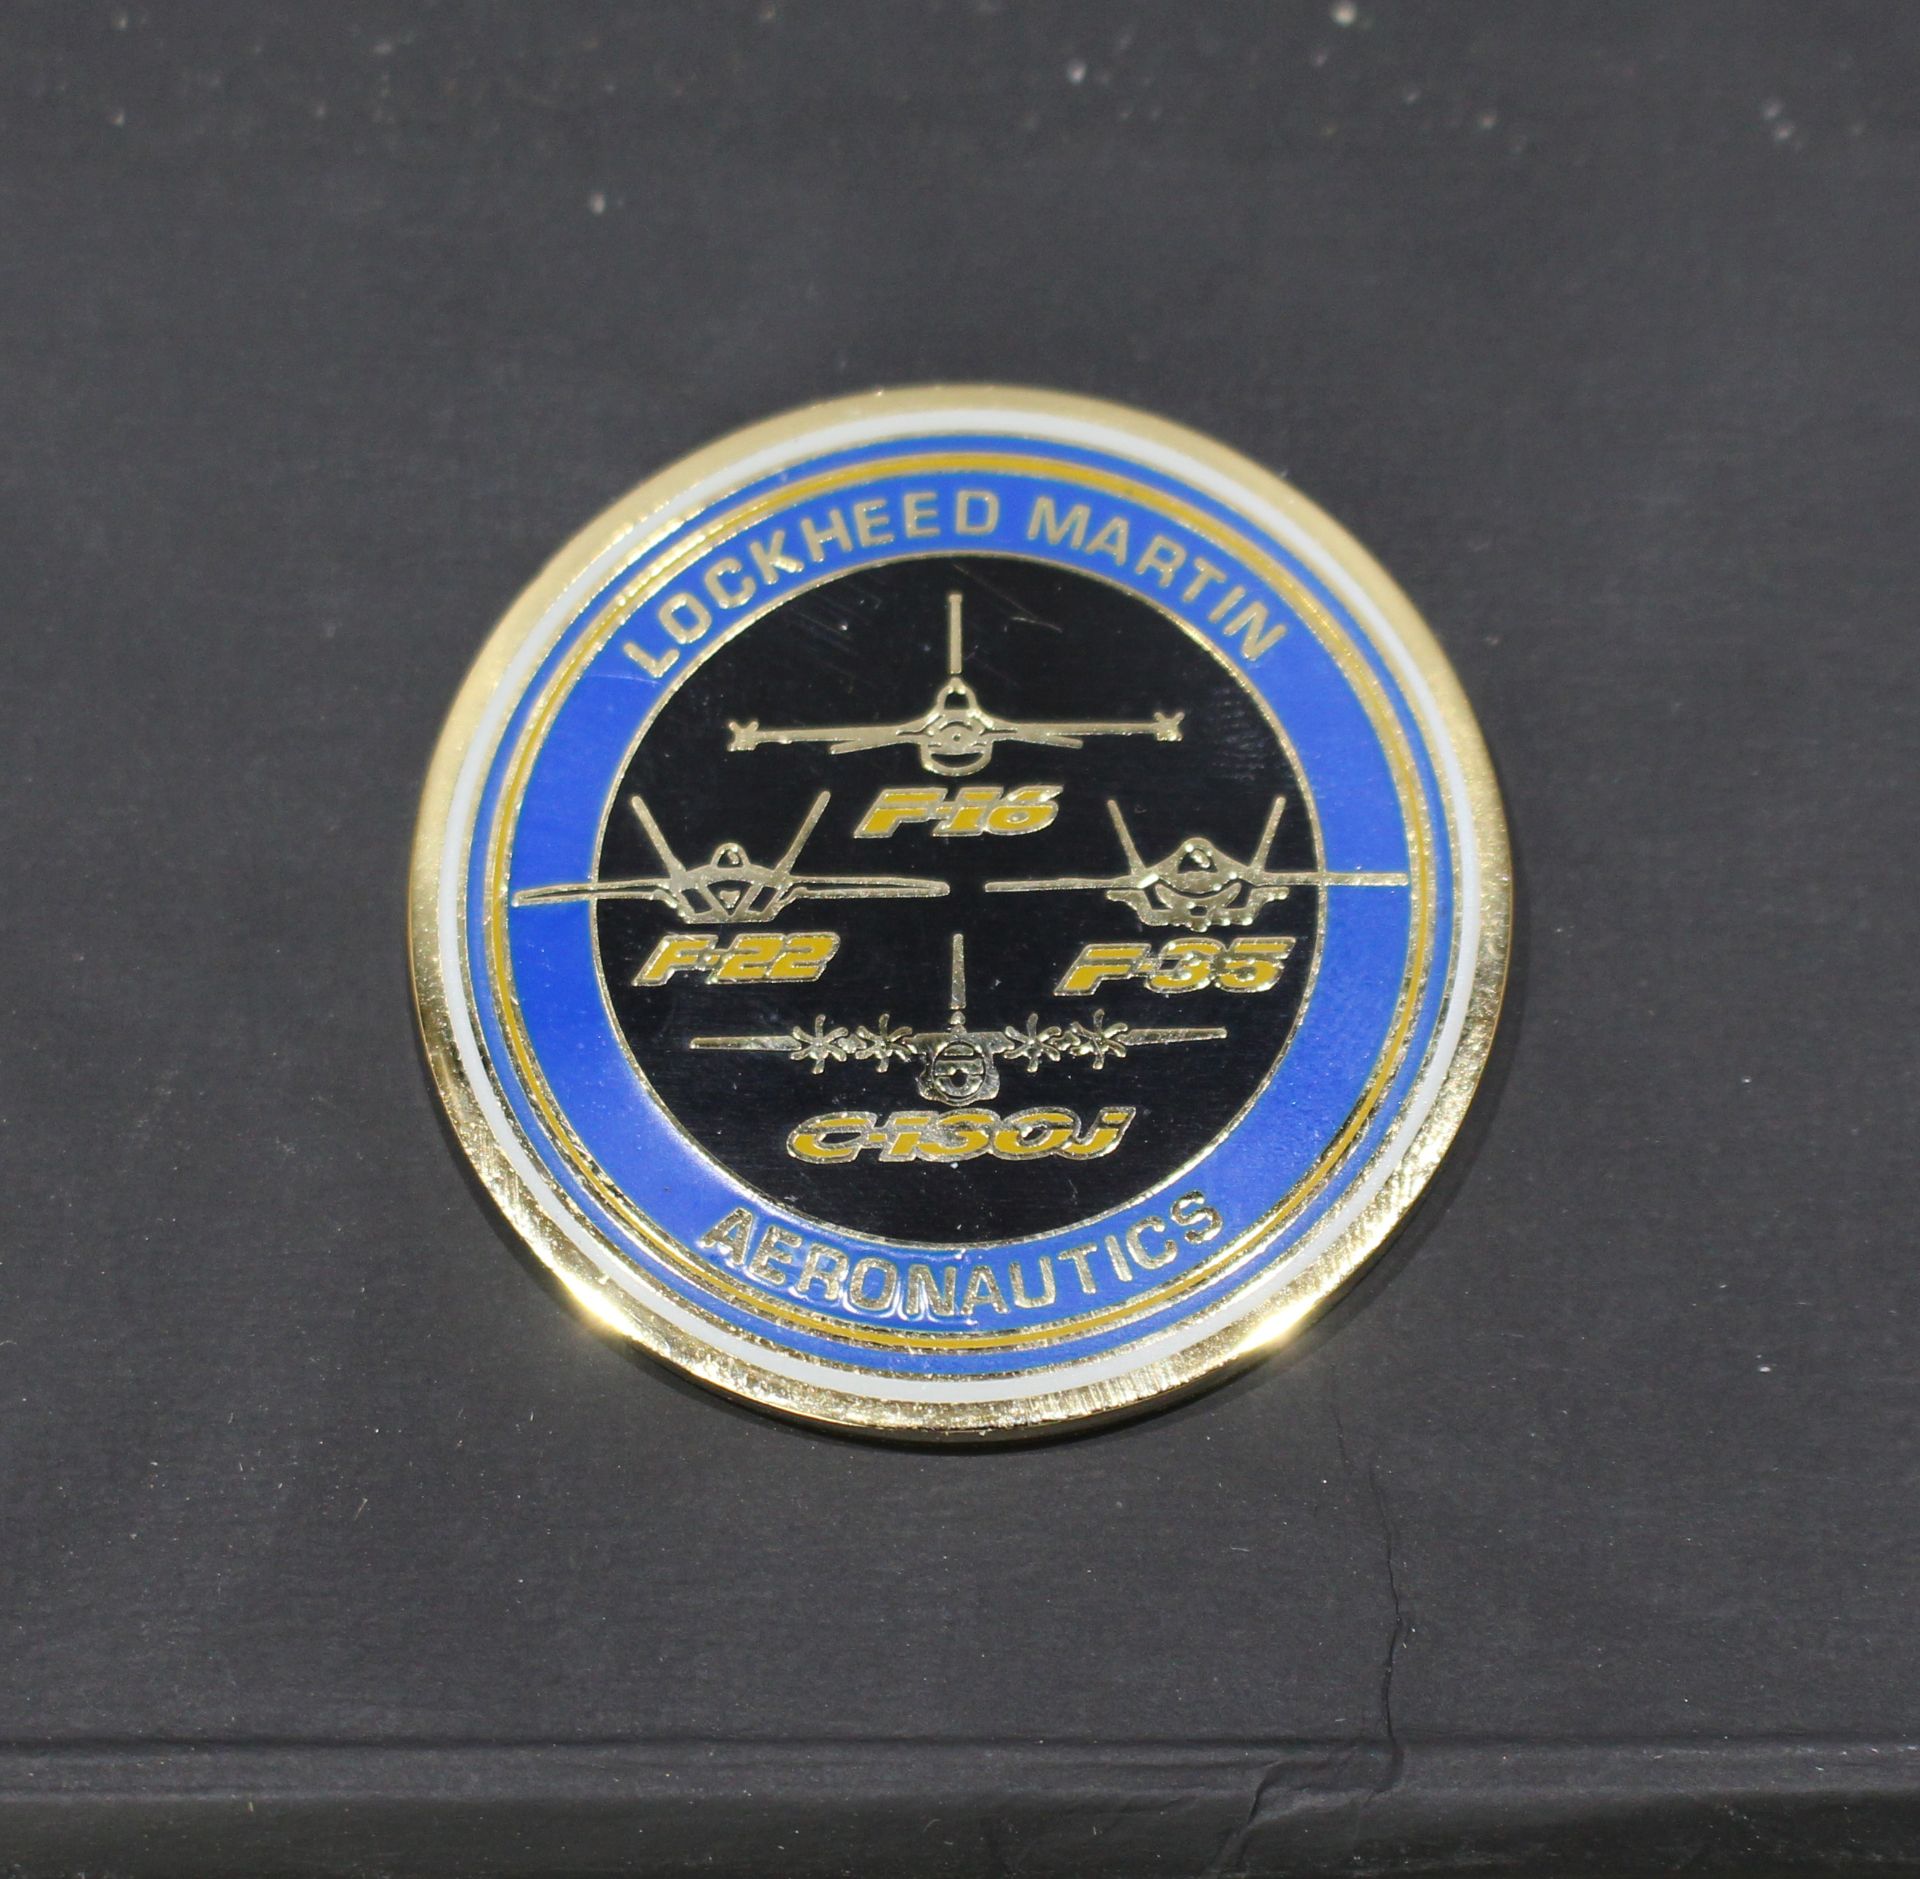 Lockheed Martin Royal Air Force 90th Anniversary Coin - Image 4 of 4